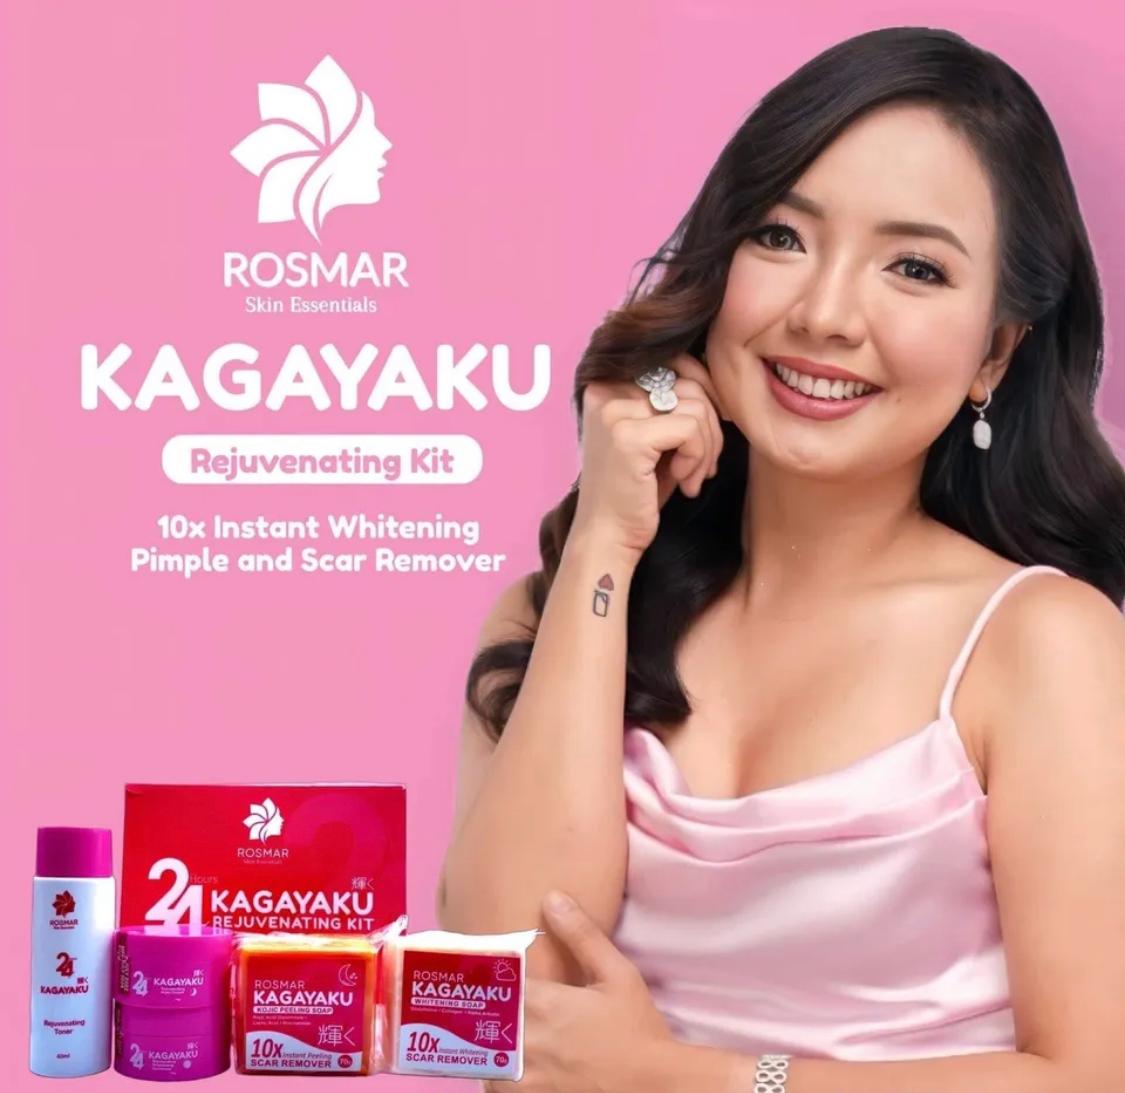 Rosmar Kagayaku Rejuvenating Set: A Fantastic Skincare Solution